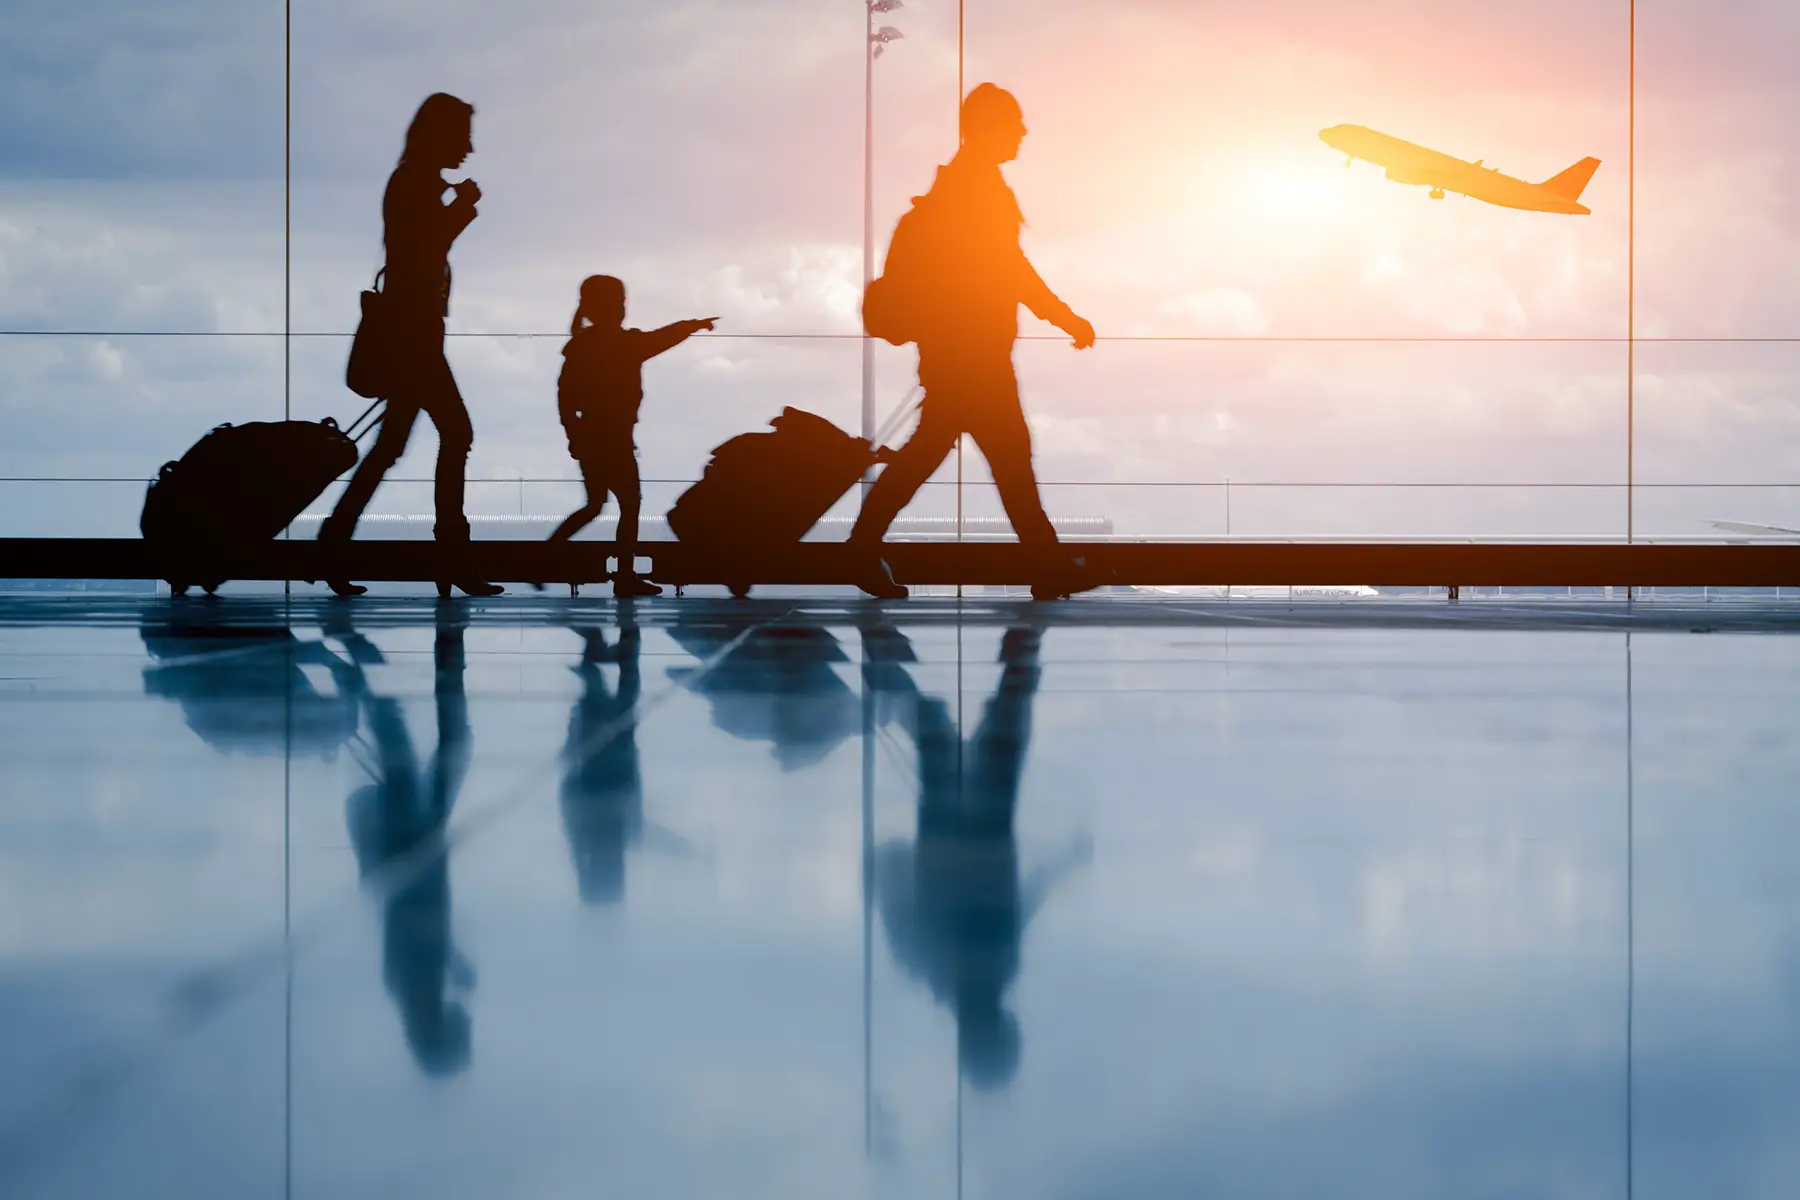 Family walking through an airport